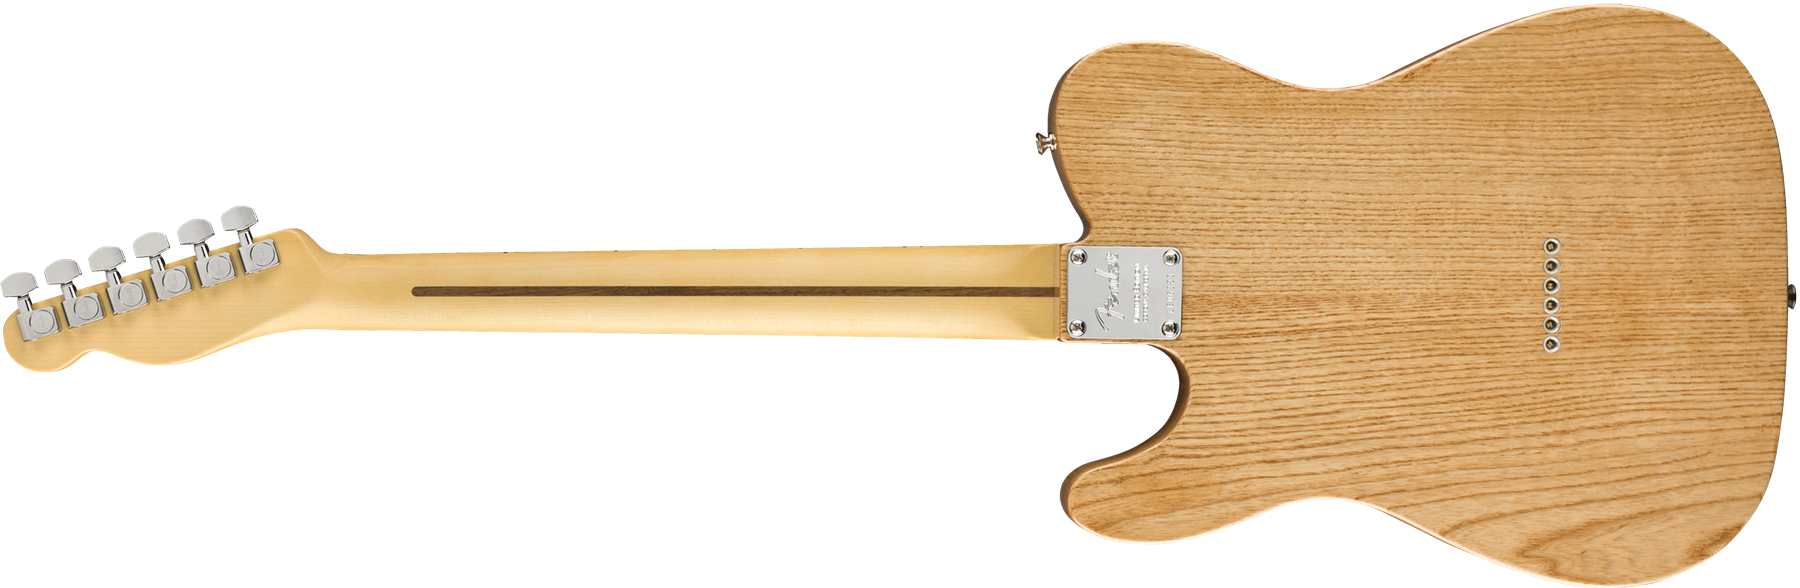 Fender Tele Quilt Maple Top Rarities Usa Mn - Blue Cloud - Tel shape electric guitar - Variation 1